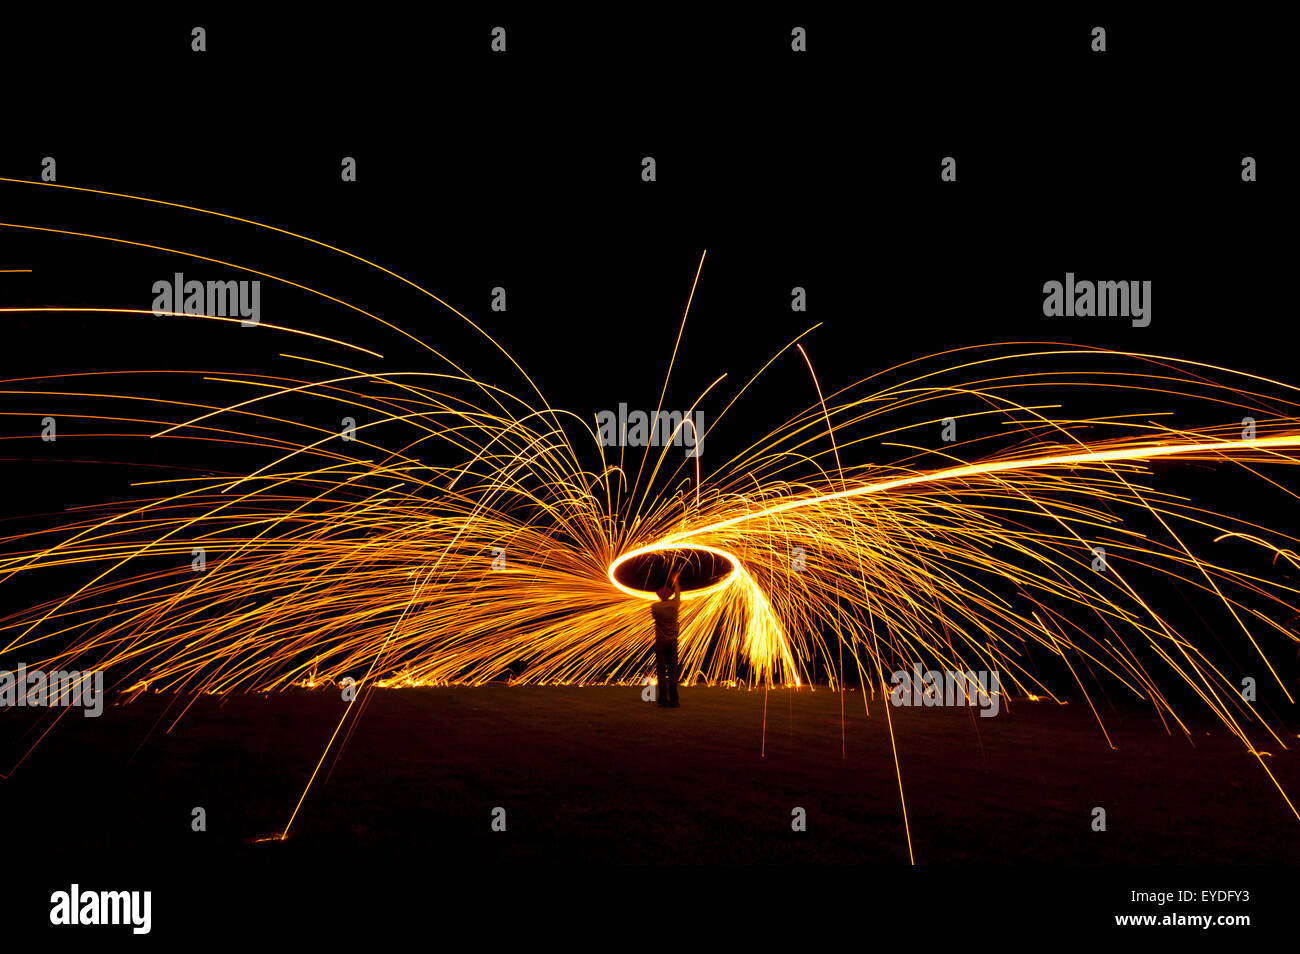 Man Spinning Ball Of Burning Steel Wool At Night, Petersfield, Hampshire, Uk Stock Photo